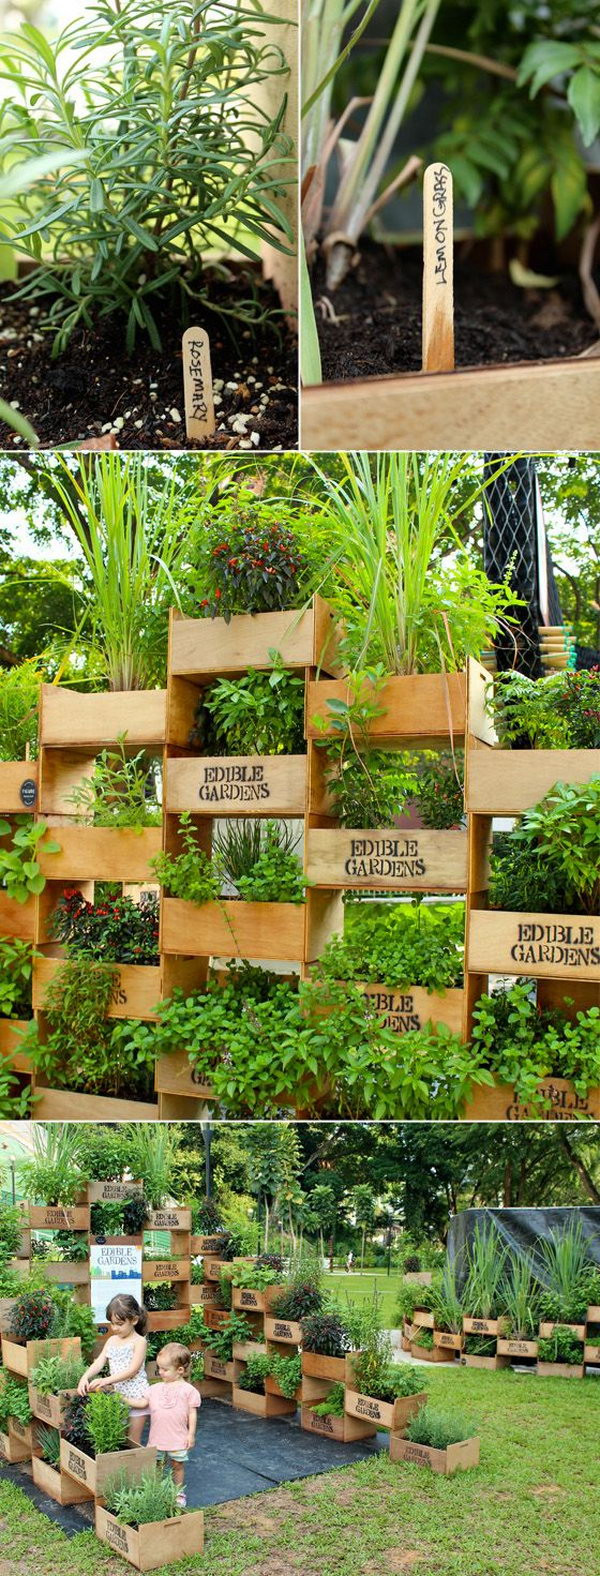 Best ideas about Vertical Garden Ideas
. Save or Pin 20 Cool Vertical Gardening Ideas Hative Now.